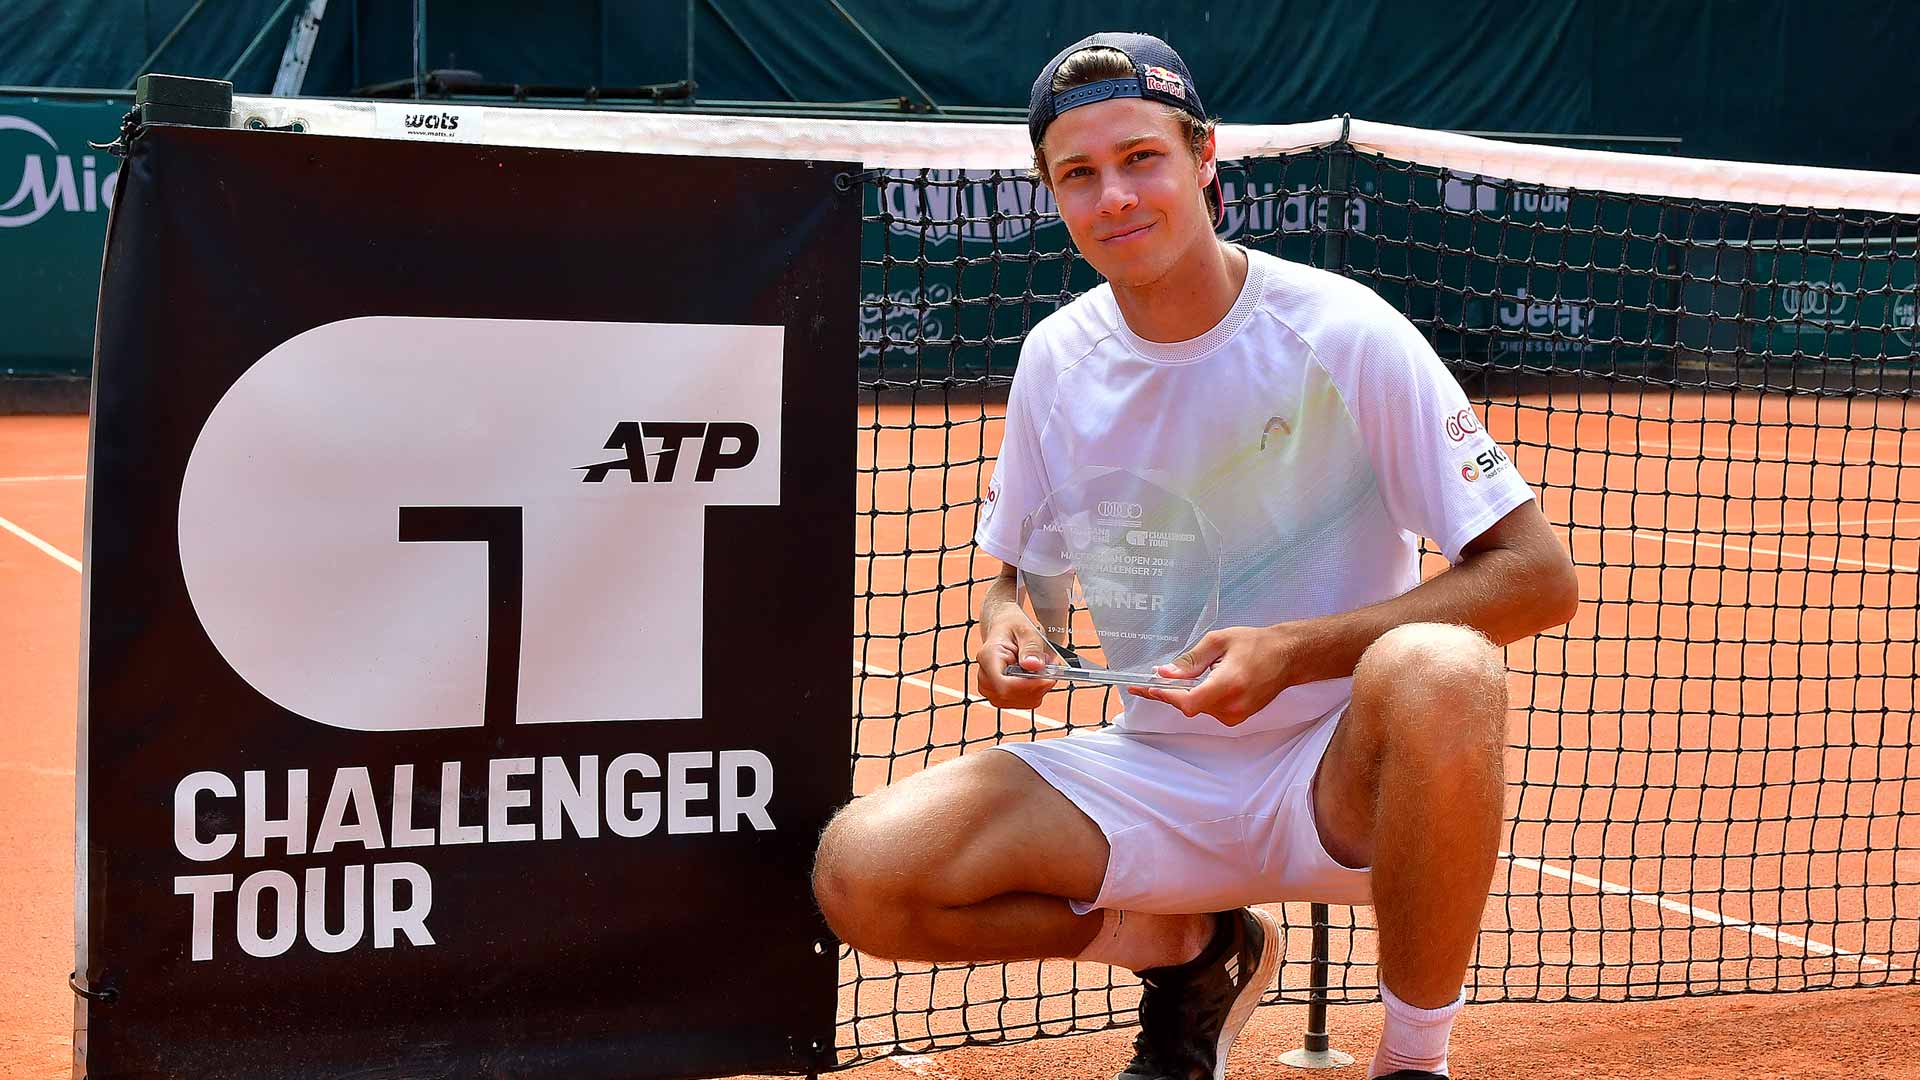 Joel Schwaerzler claims his first ATP Challenger Tour title in Skopje, Macedonia.